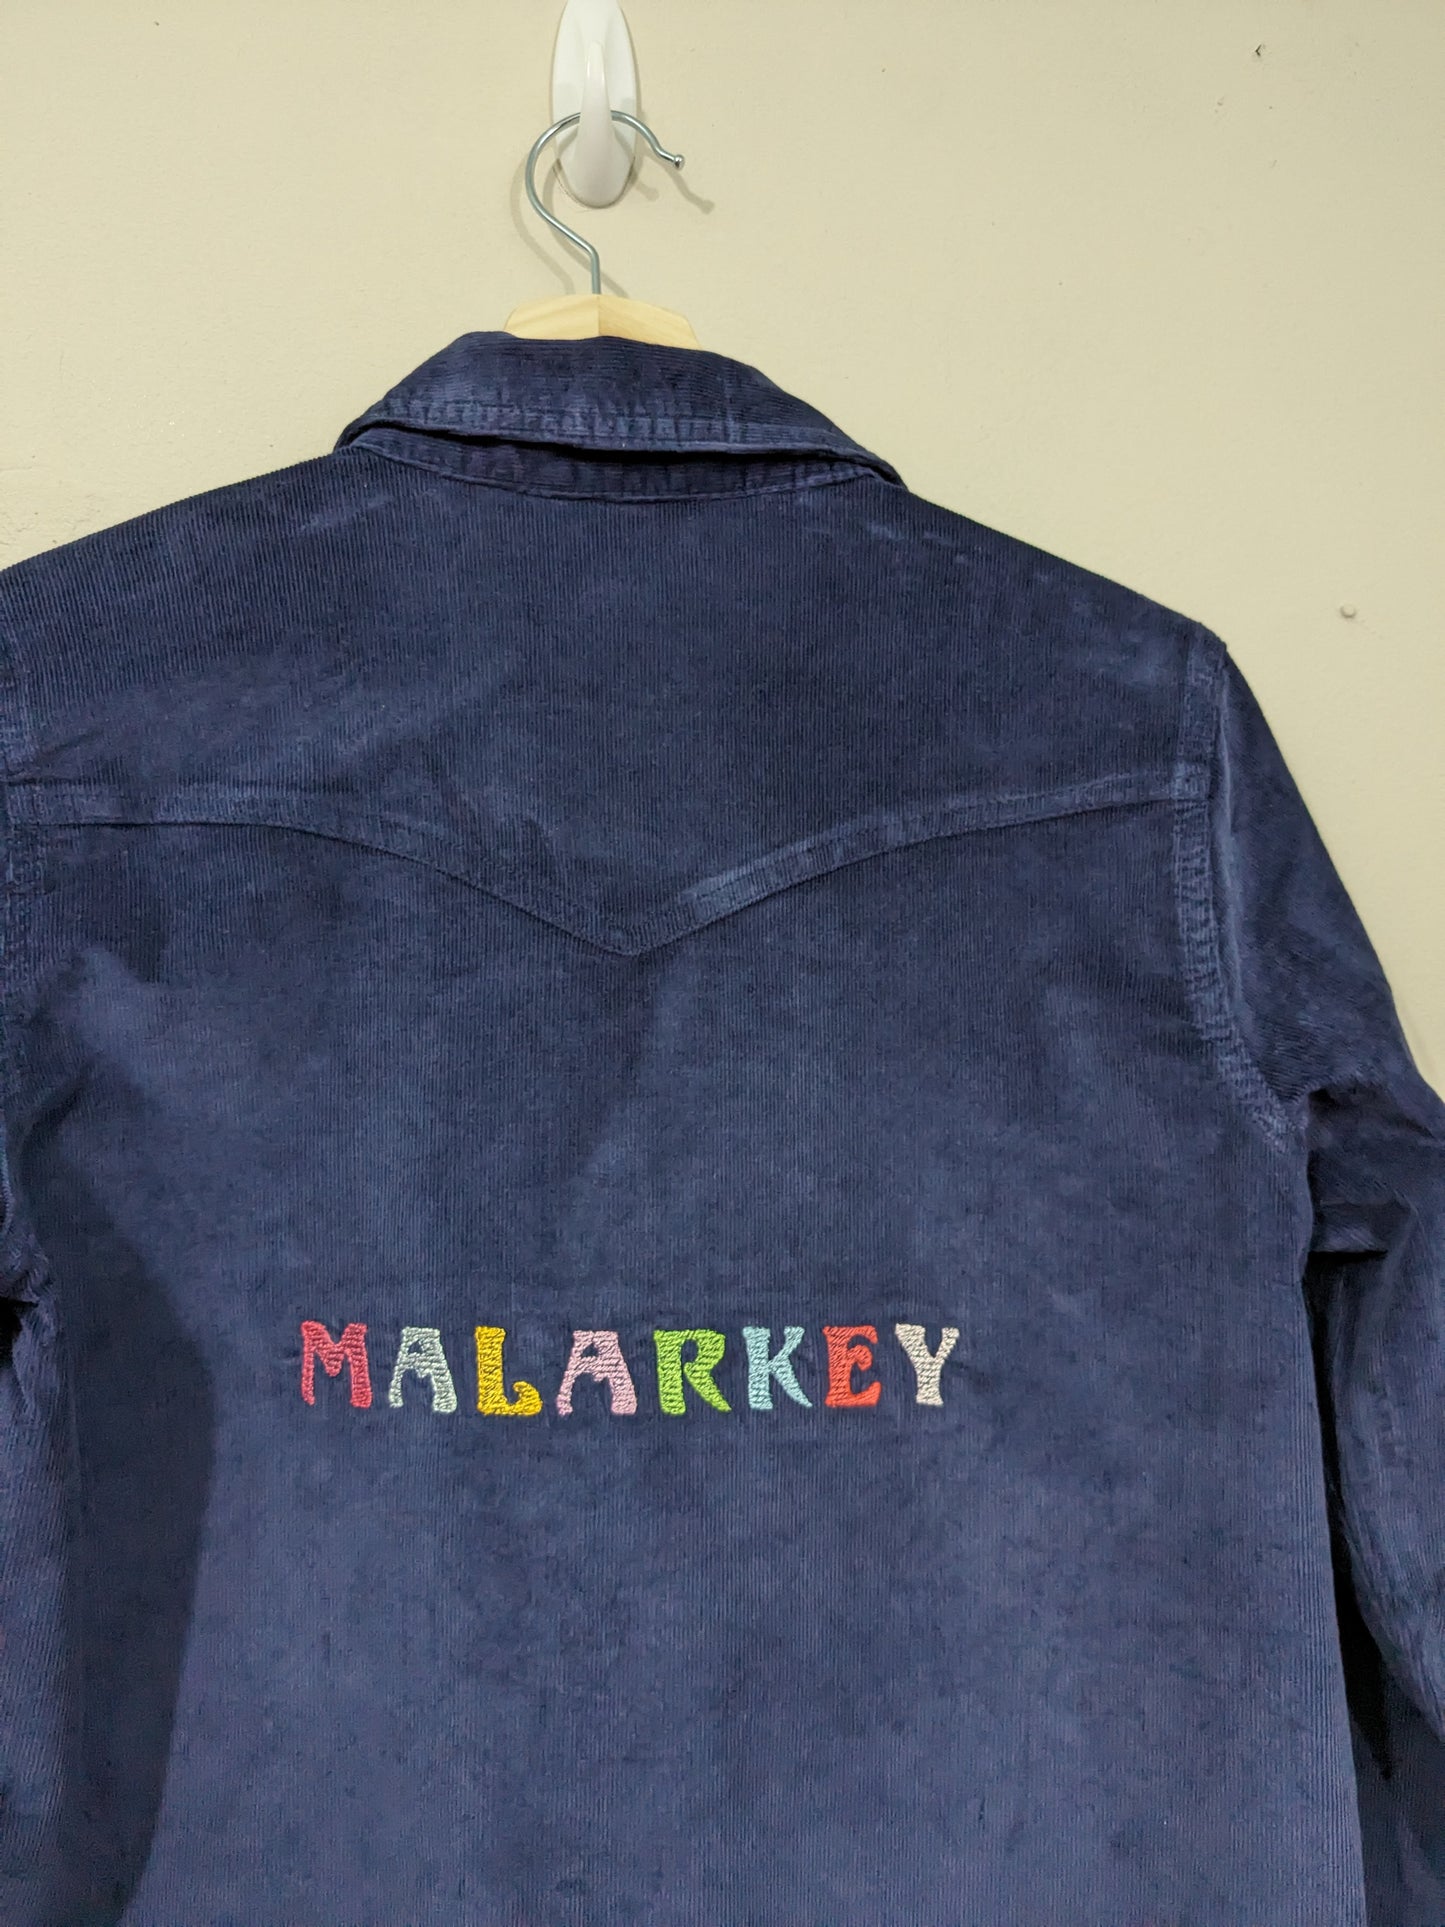 Size 12 Upcycled Navy Cord Shirt - Embroidered Rainbow 'Malarkey' Design